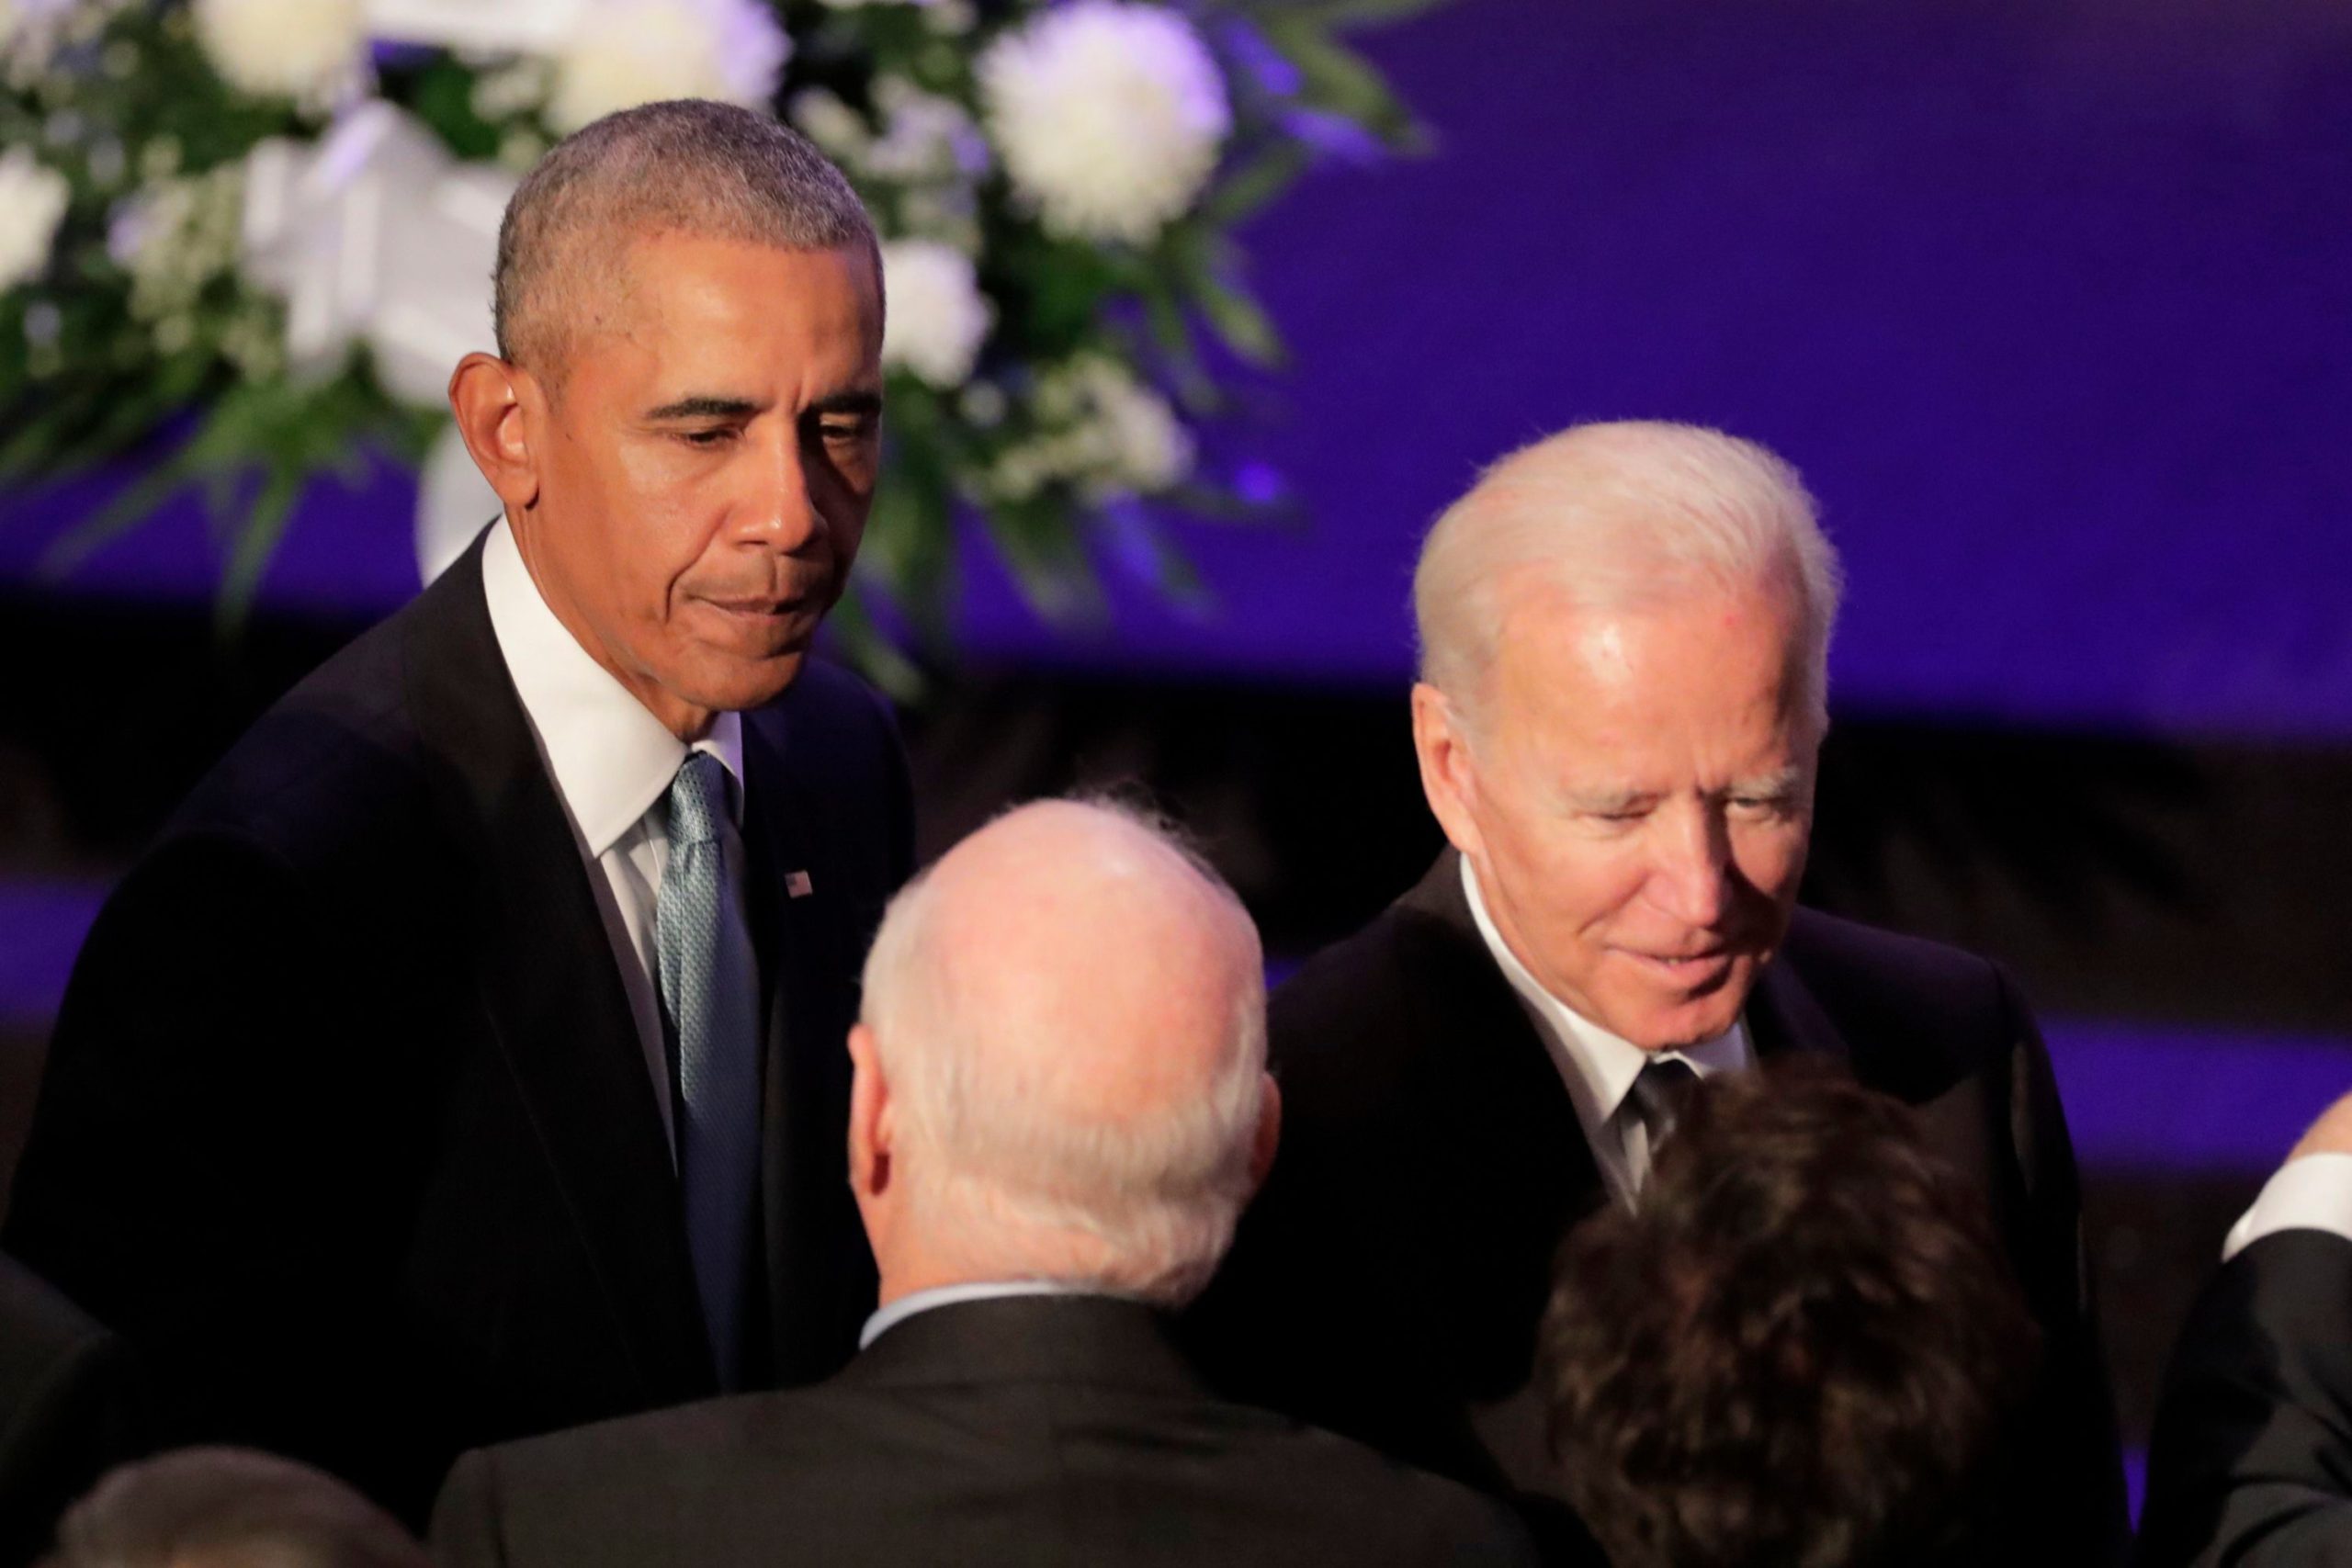 Barack Obama Endorses His 'Friend' Joe Biden's Presidential Bid